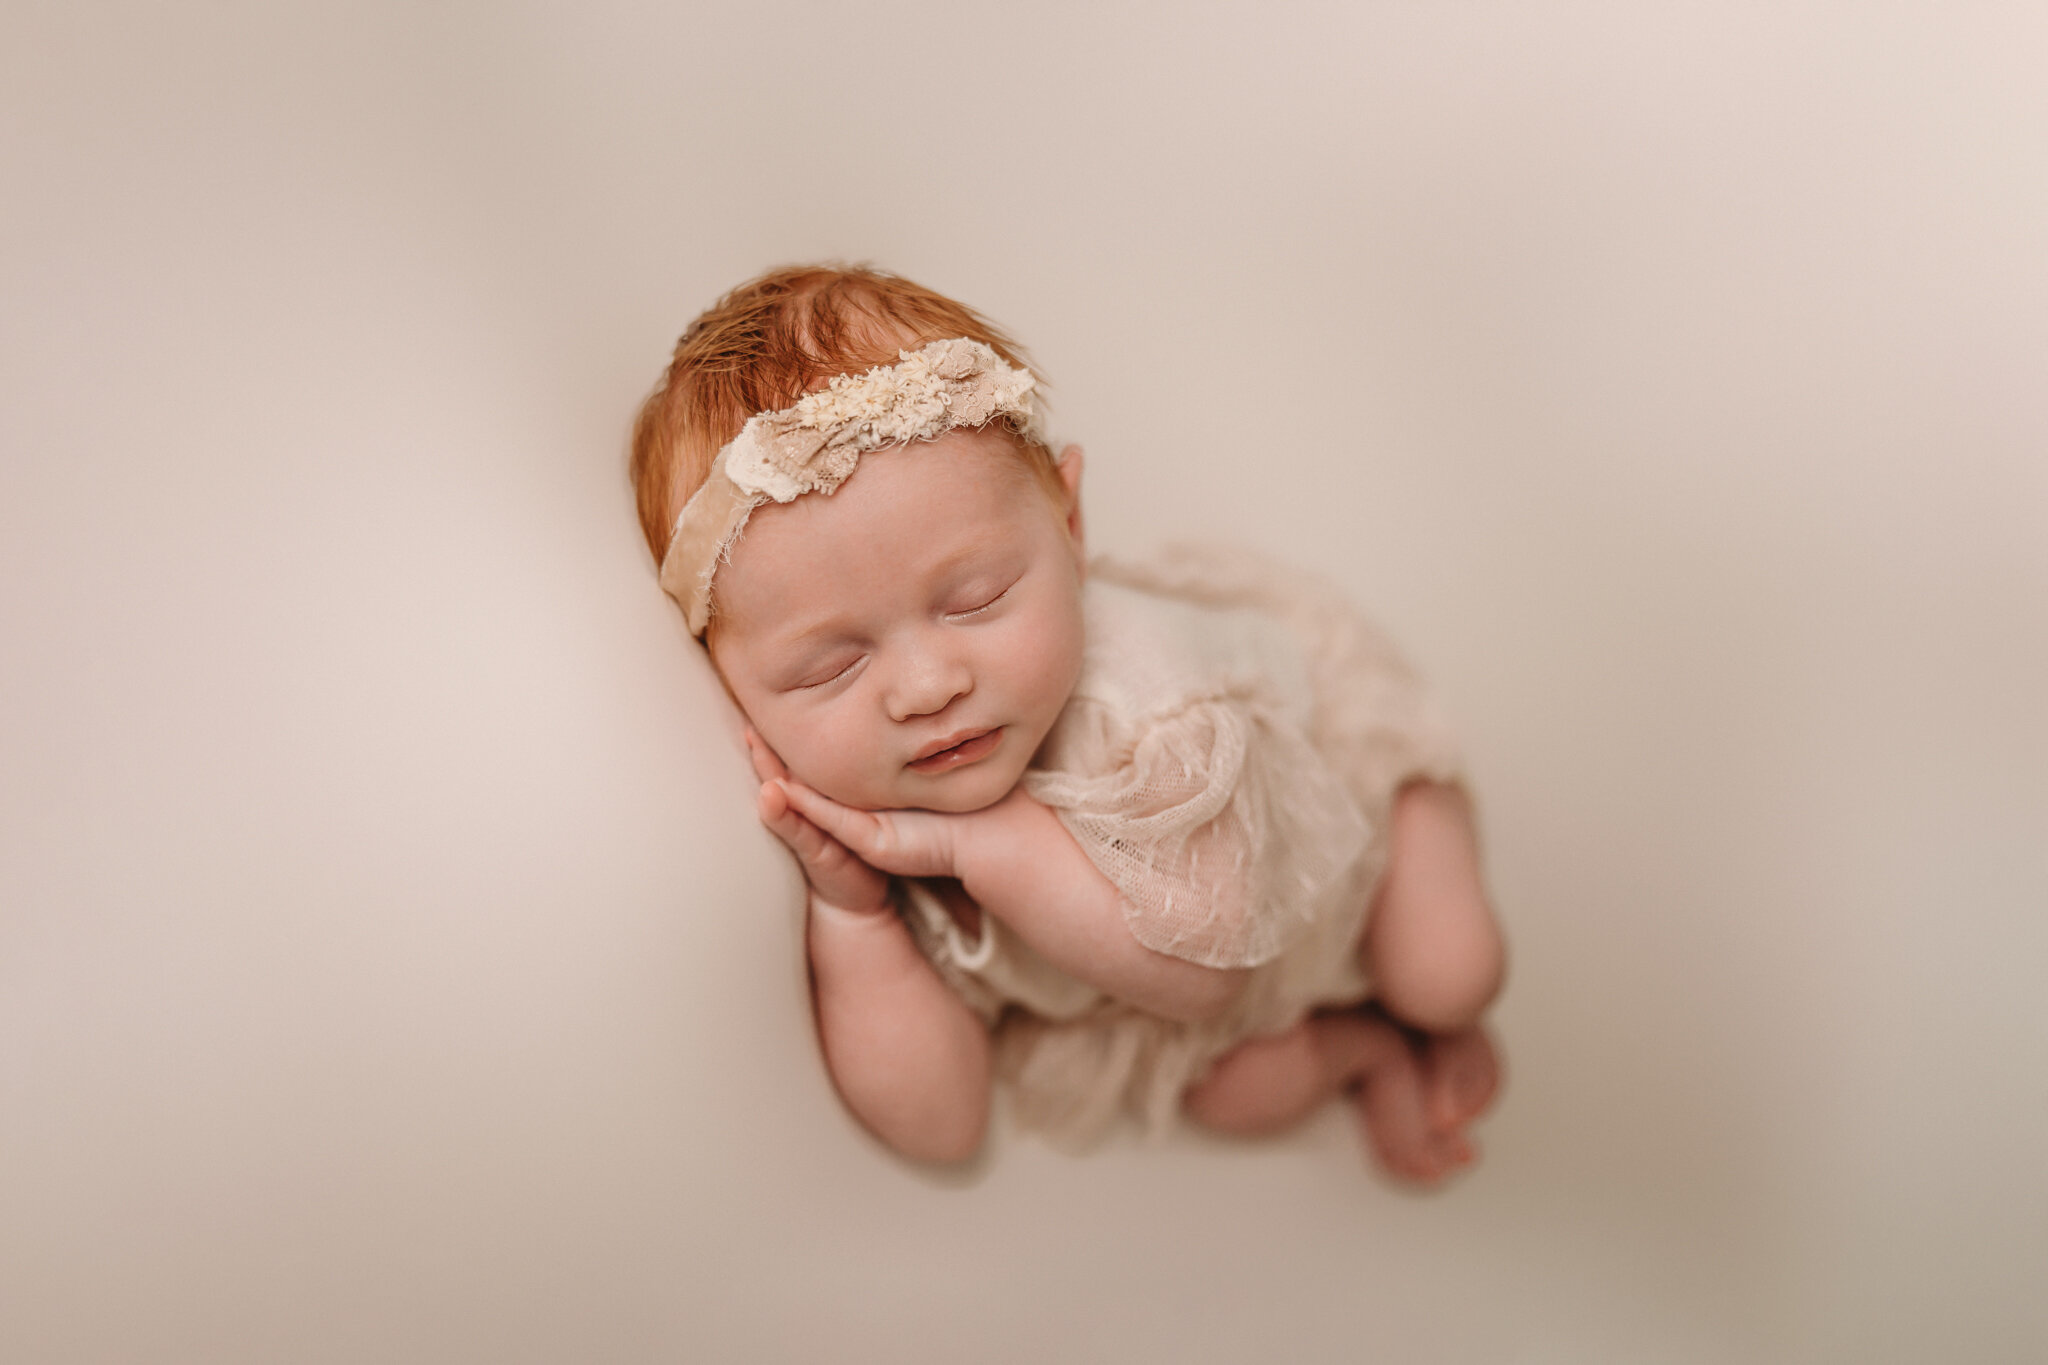 Forster professional baby photography, Forster Photo Studio,&nbsp;newborn photographers Taree, Taree newborn photos,&nbsp;baby photography Taree